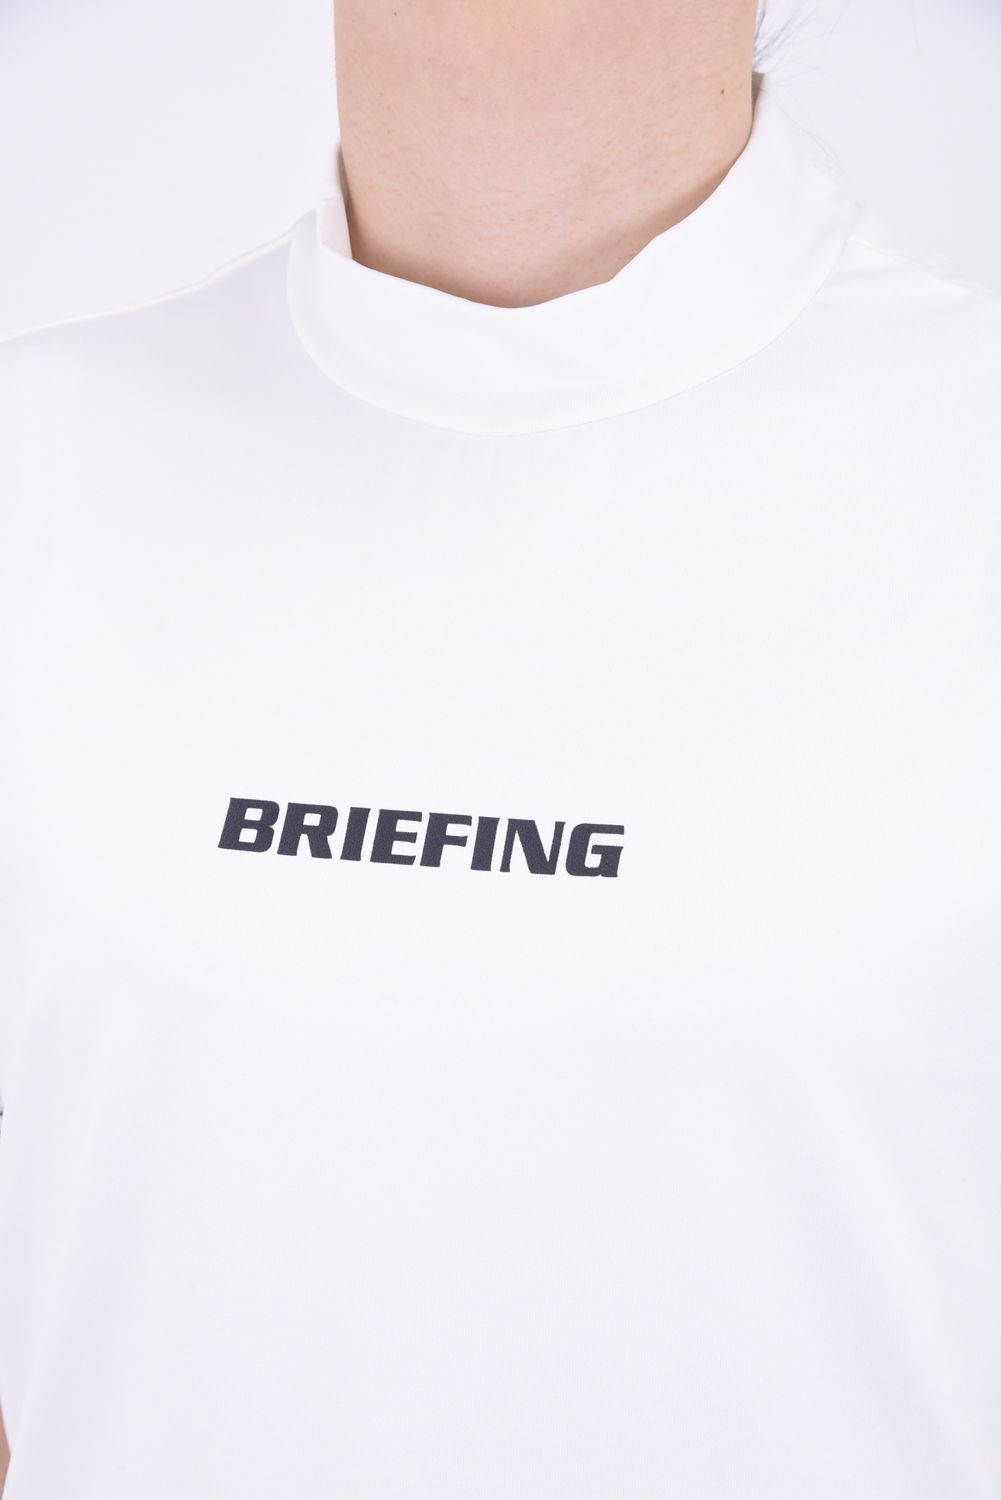 BRIEFING - 【レディース】 WOMENS TOUR HIGH NECK / ブランドロゴ